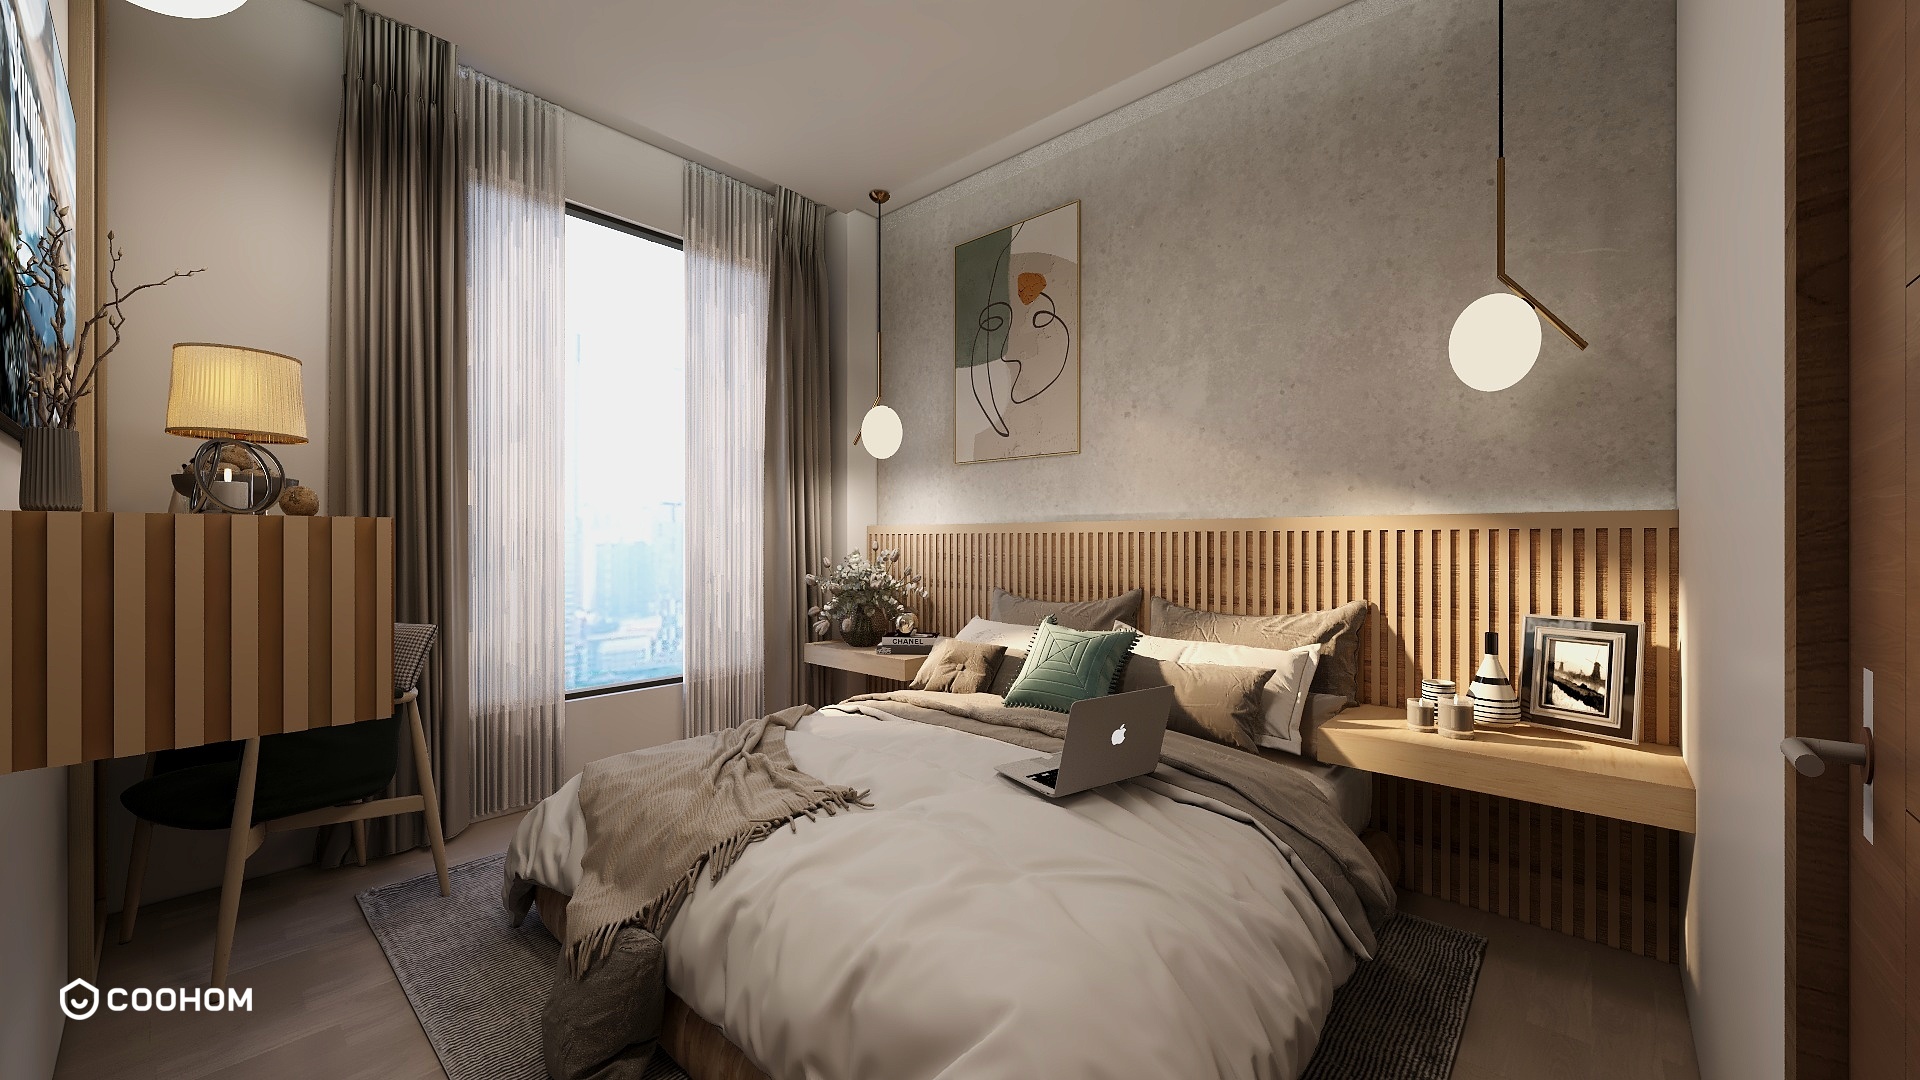 NoormArcInterioR的装修设计方案:Modern Small Bedroom Apartment Design